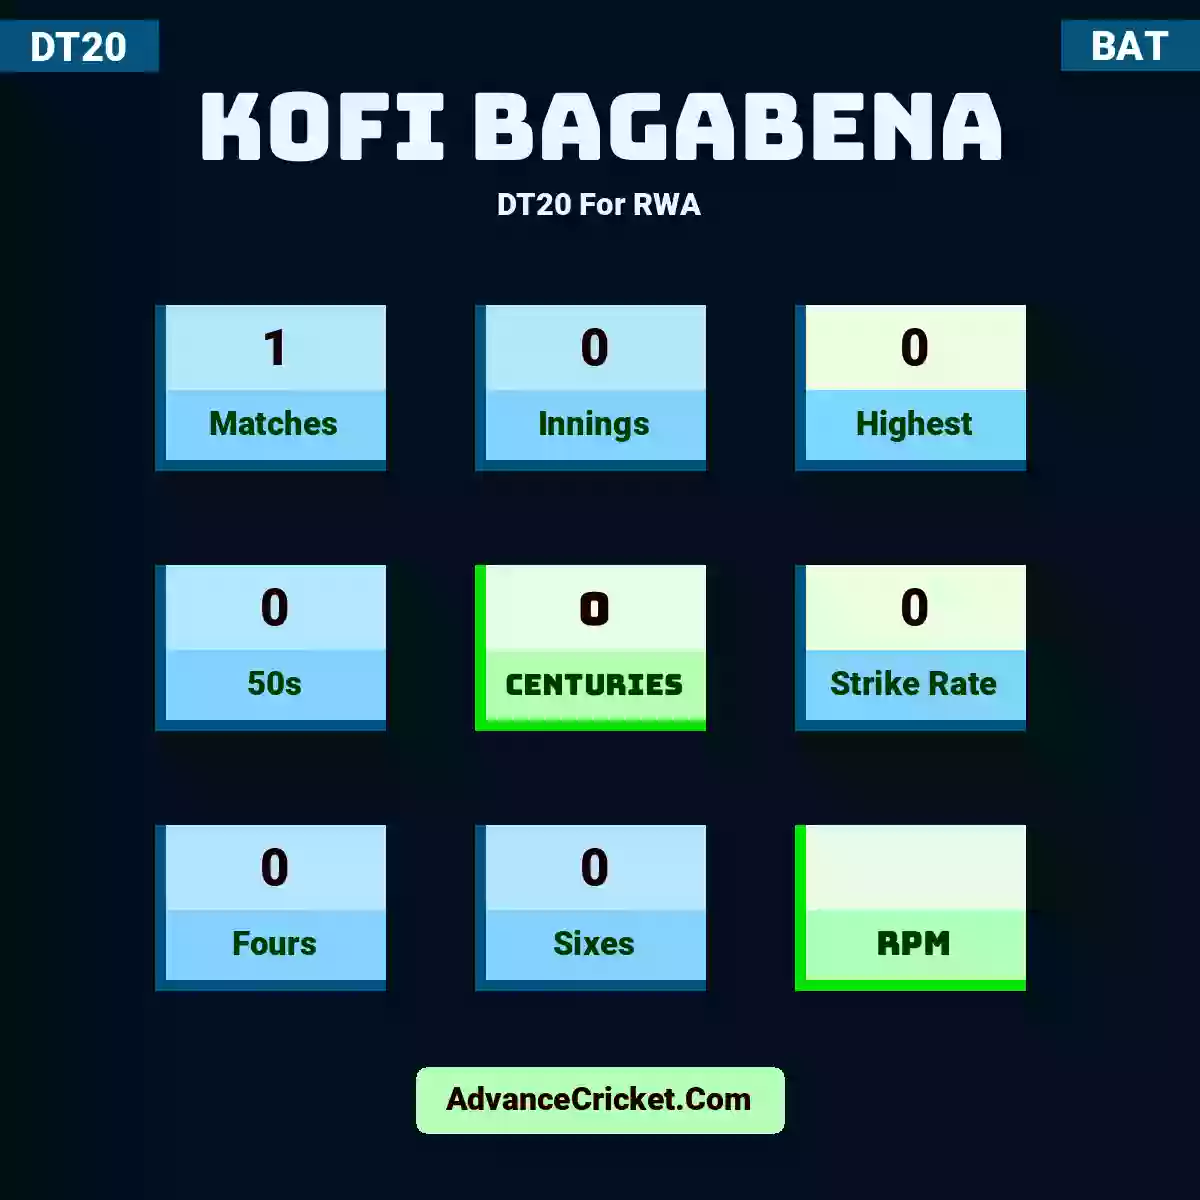 Kofi Bagabena DT20  For RWA, Kofi Bagabena played 1 matches, scored 0 runs as highest, 0 half-centuries, and 0 centuries, with a strike rate of 0. K.Bagabena hit 0 fours and 0 sixes.